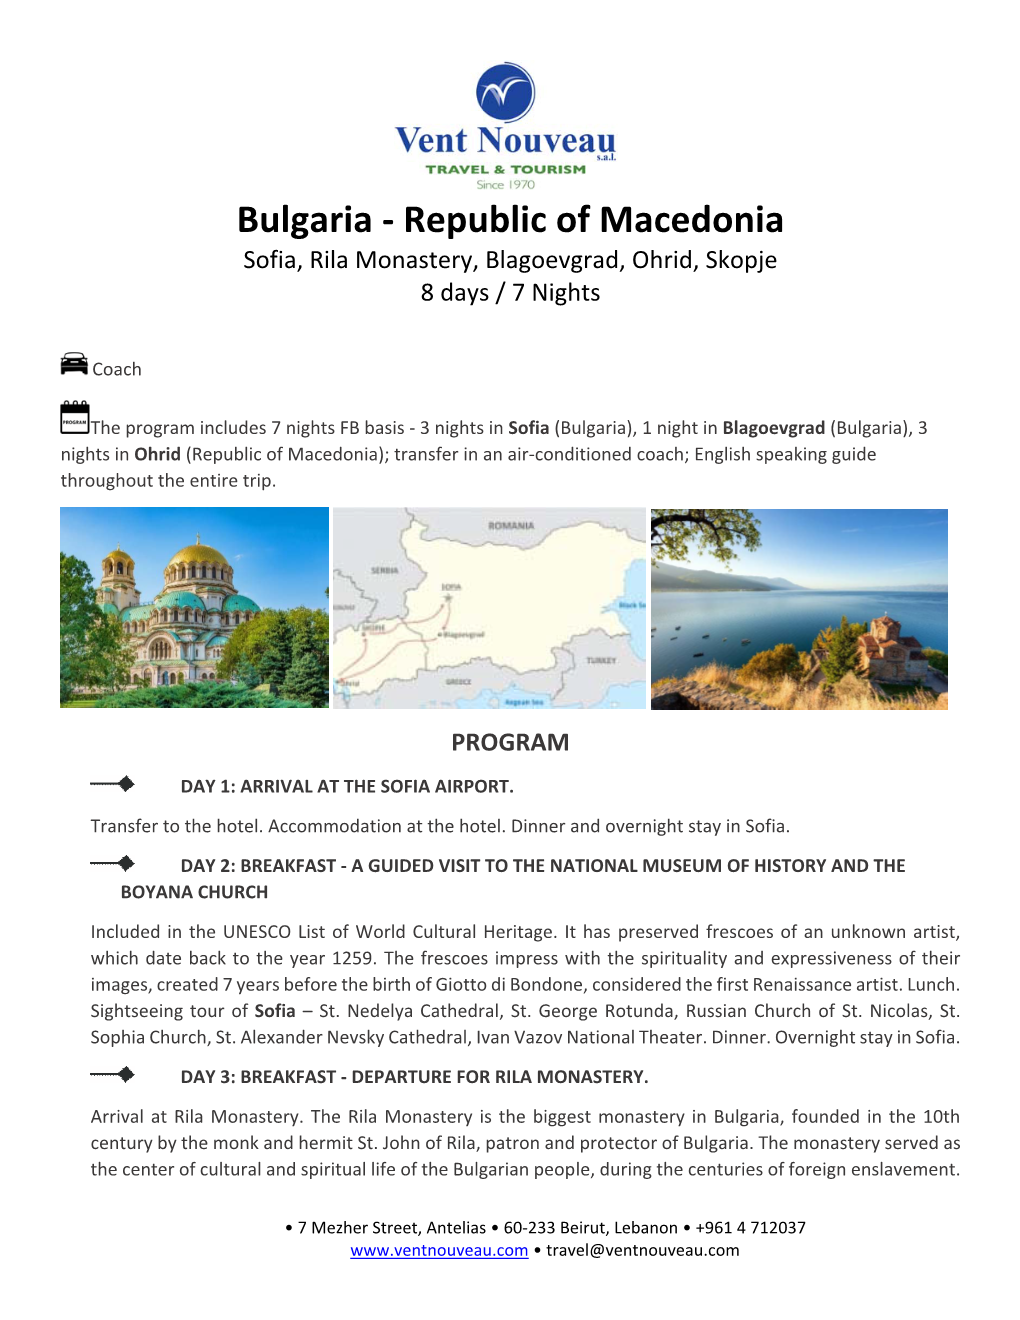 Bulgaria ‐ Republic of Macedonia Sofia, Rila Monastery, Blagoevgrad, Ohrid, Skopje 8 Days / 7 Nights